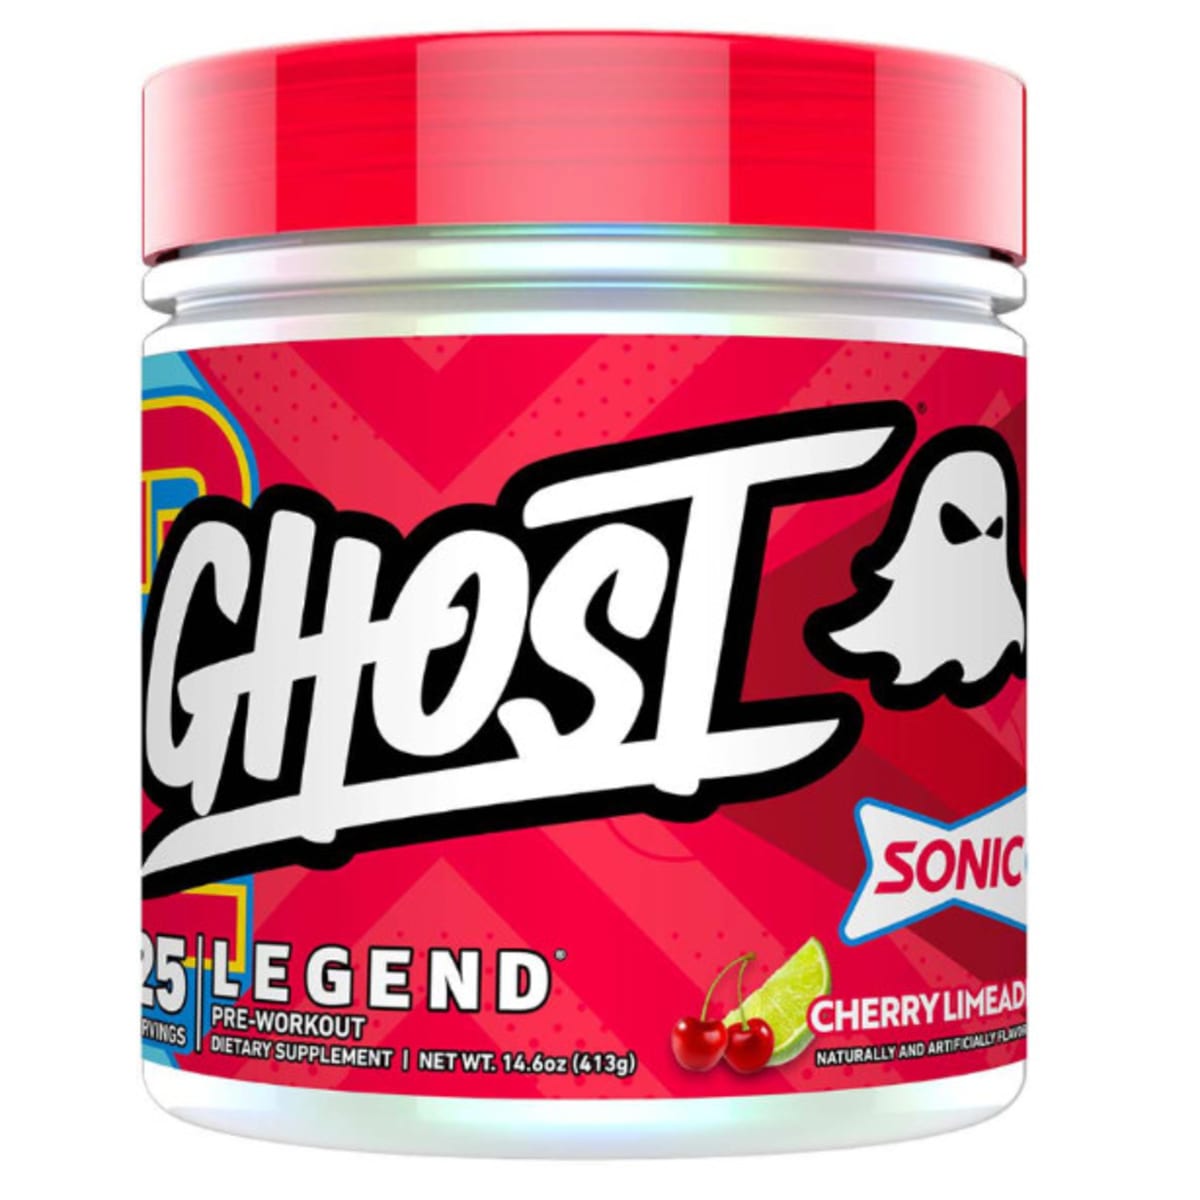  GHOST Legend V2 Pre-Workout Energy Powder, Sonic Ocean